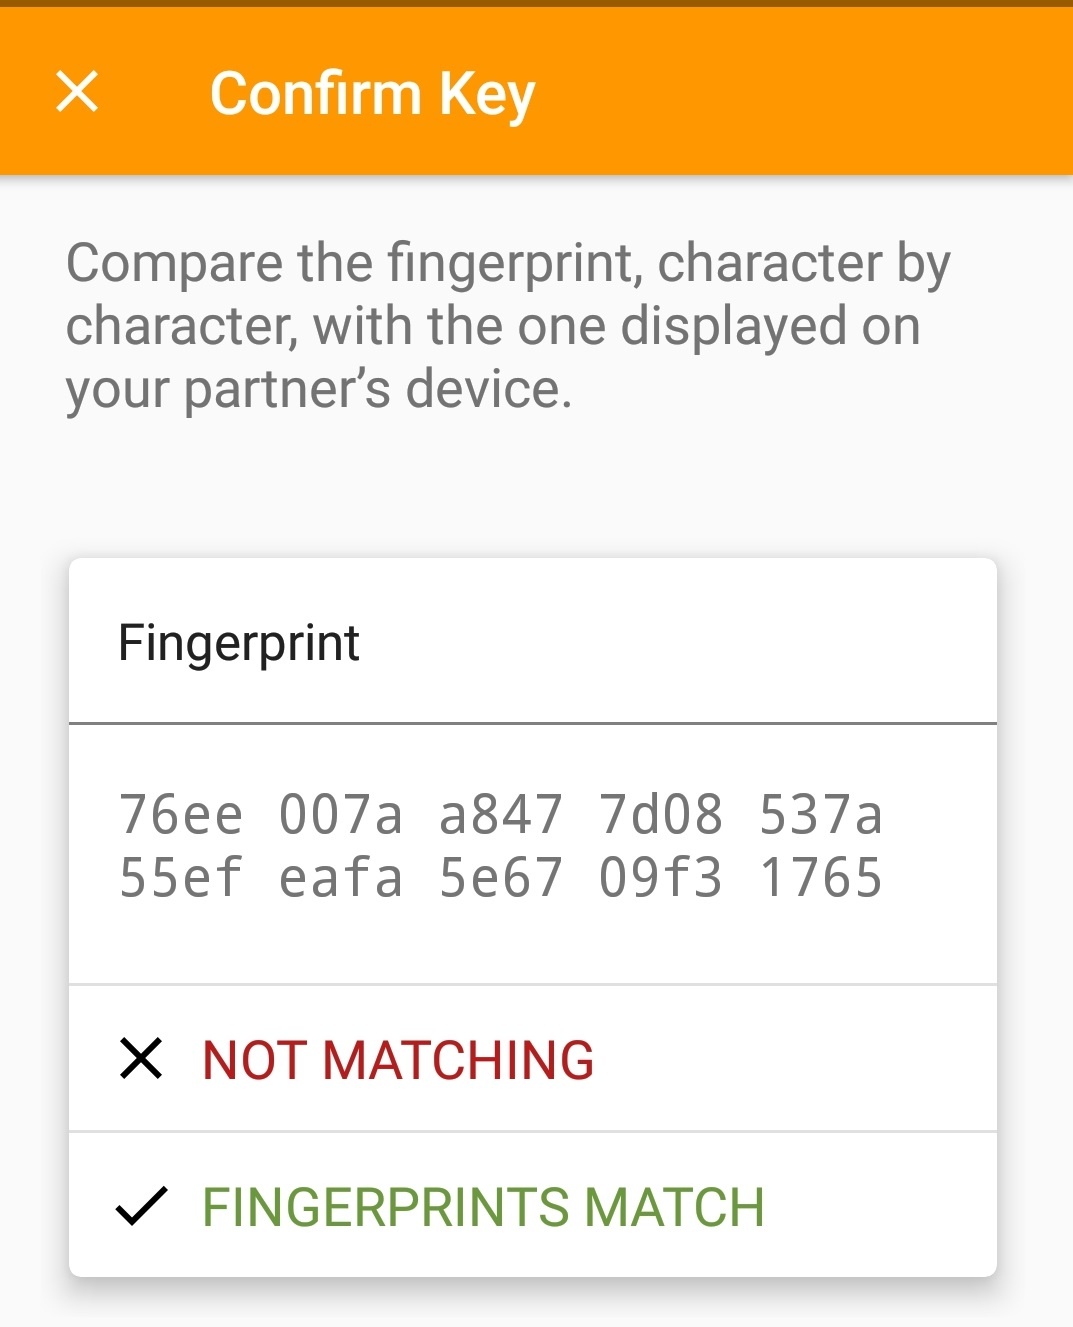 OpenKeychain key confirmation by comparing key fingerprints